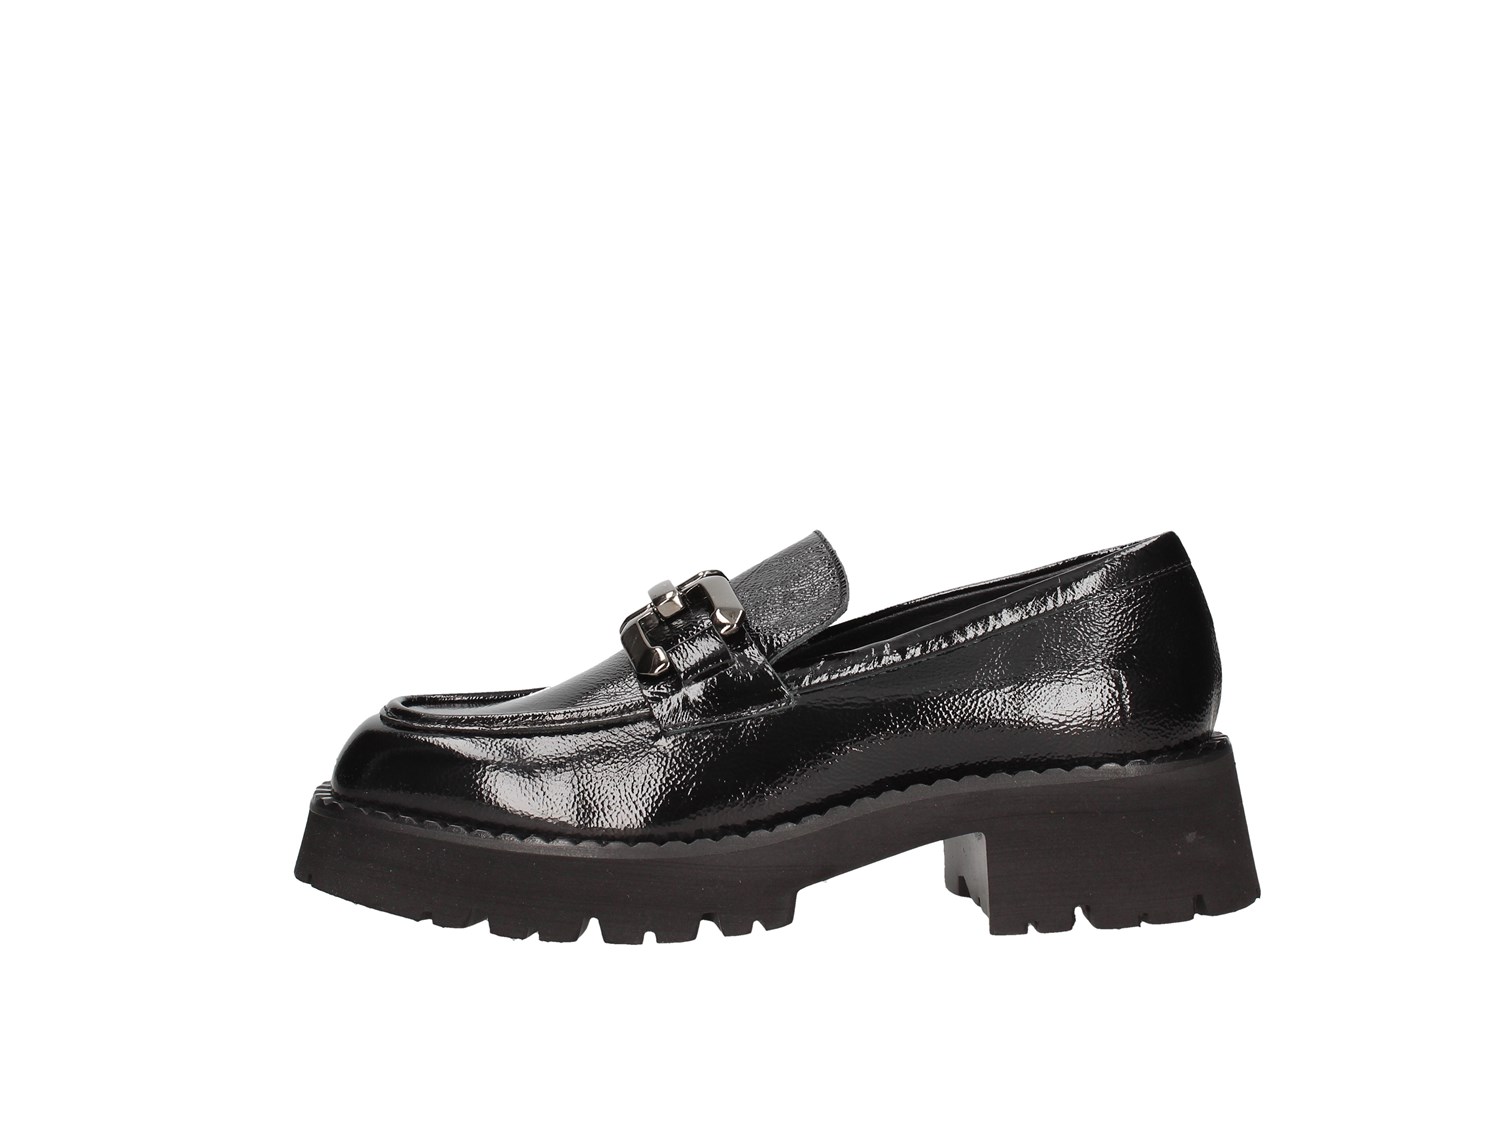 Vsl 7359/inv Black Shoes Women Moccasin